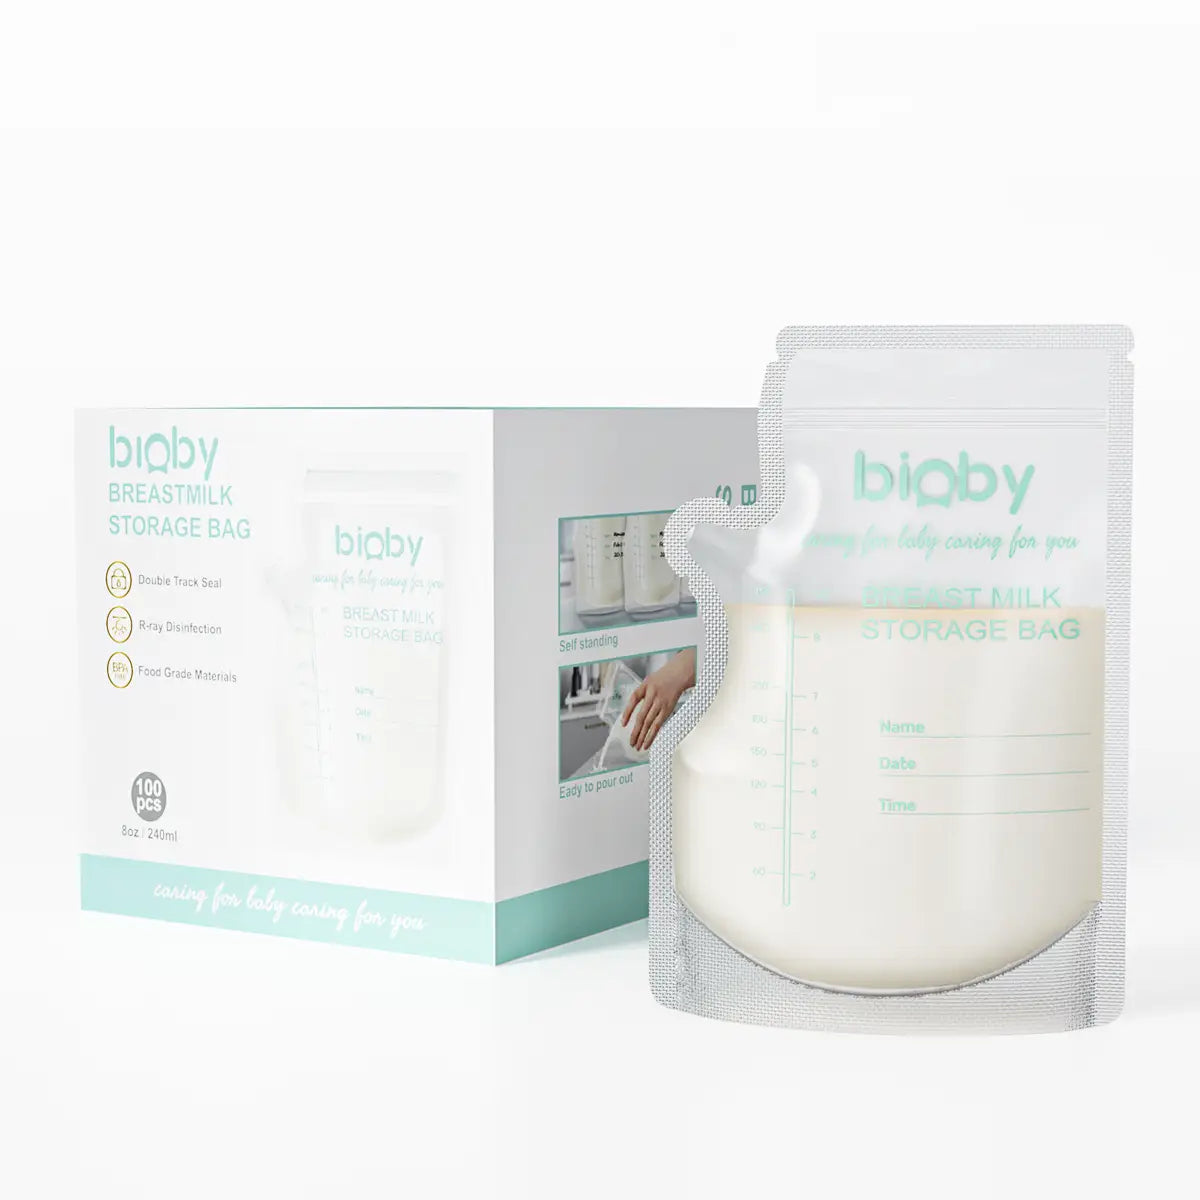 Bioby 100pcs 40ml Milk Freezer Bags Leakproof Mother Baby